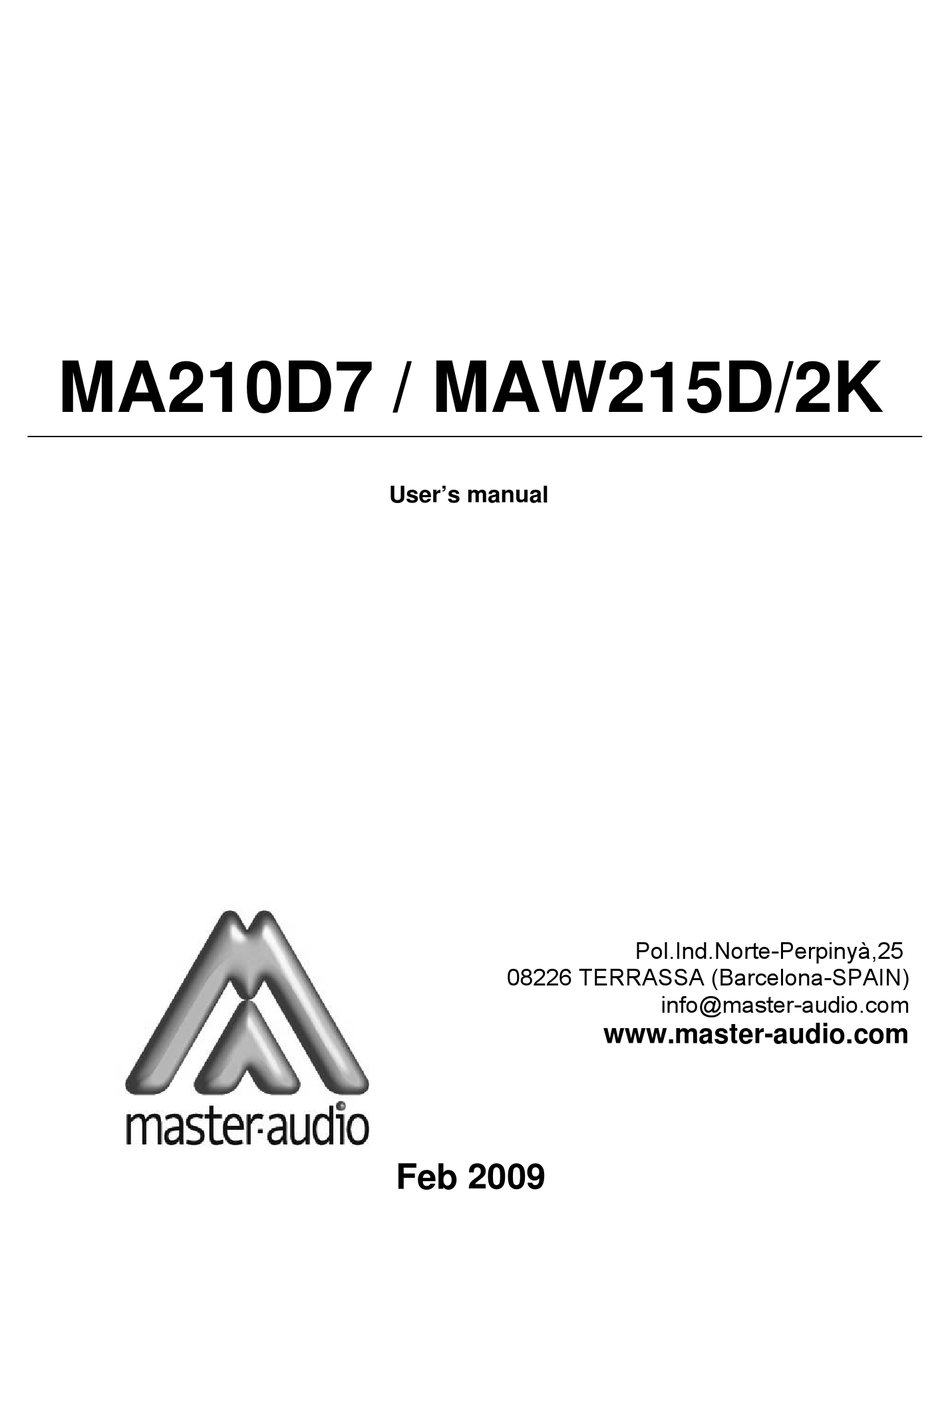 mrc soundmaster 210 manual arts